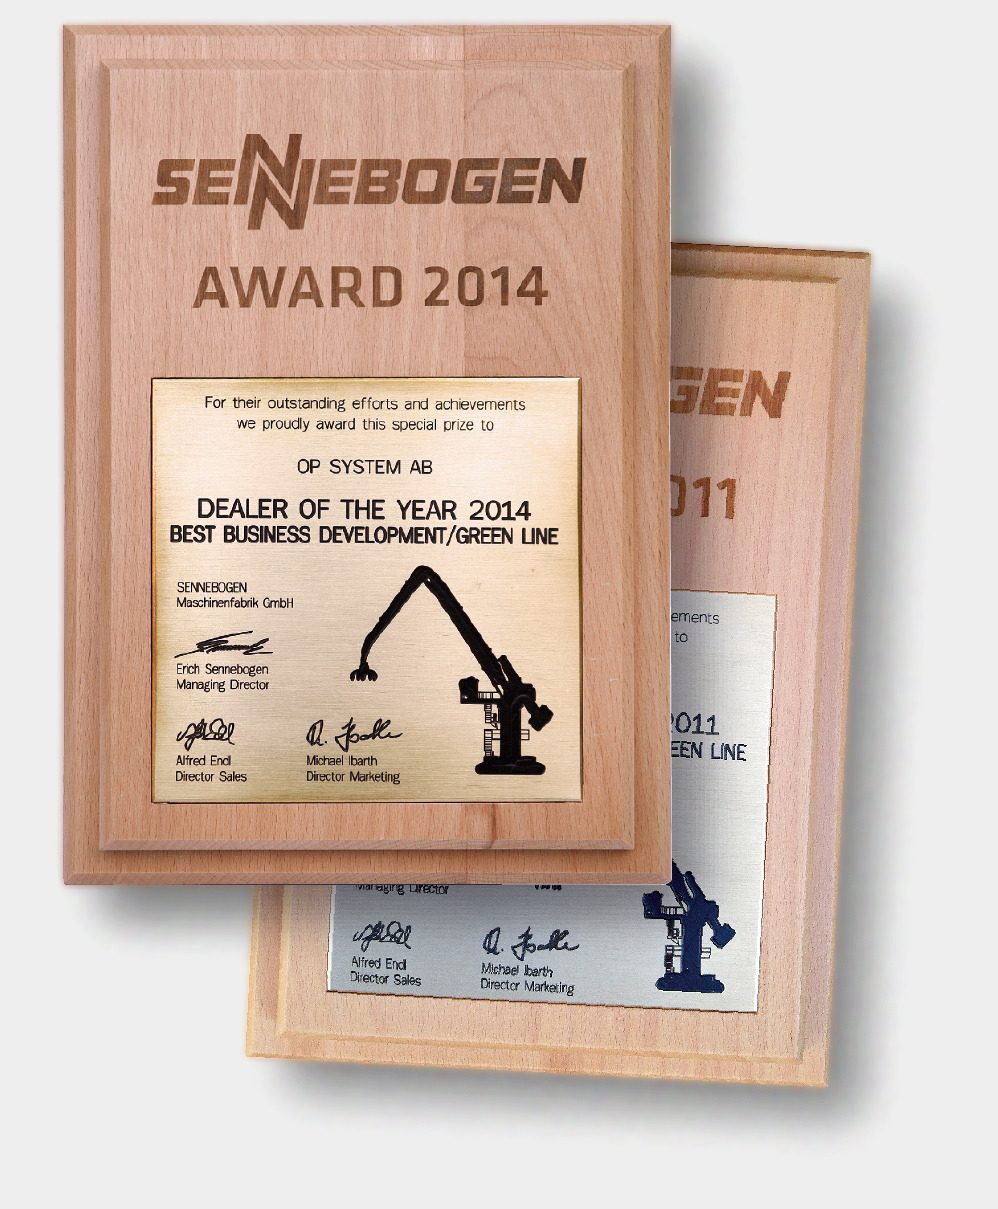 Sennebogen Award 2014